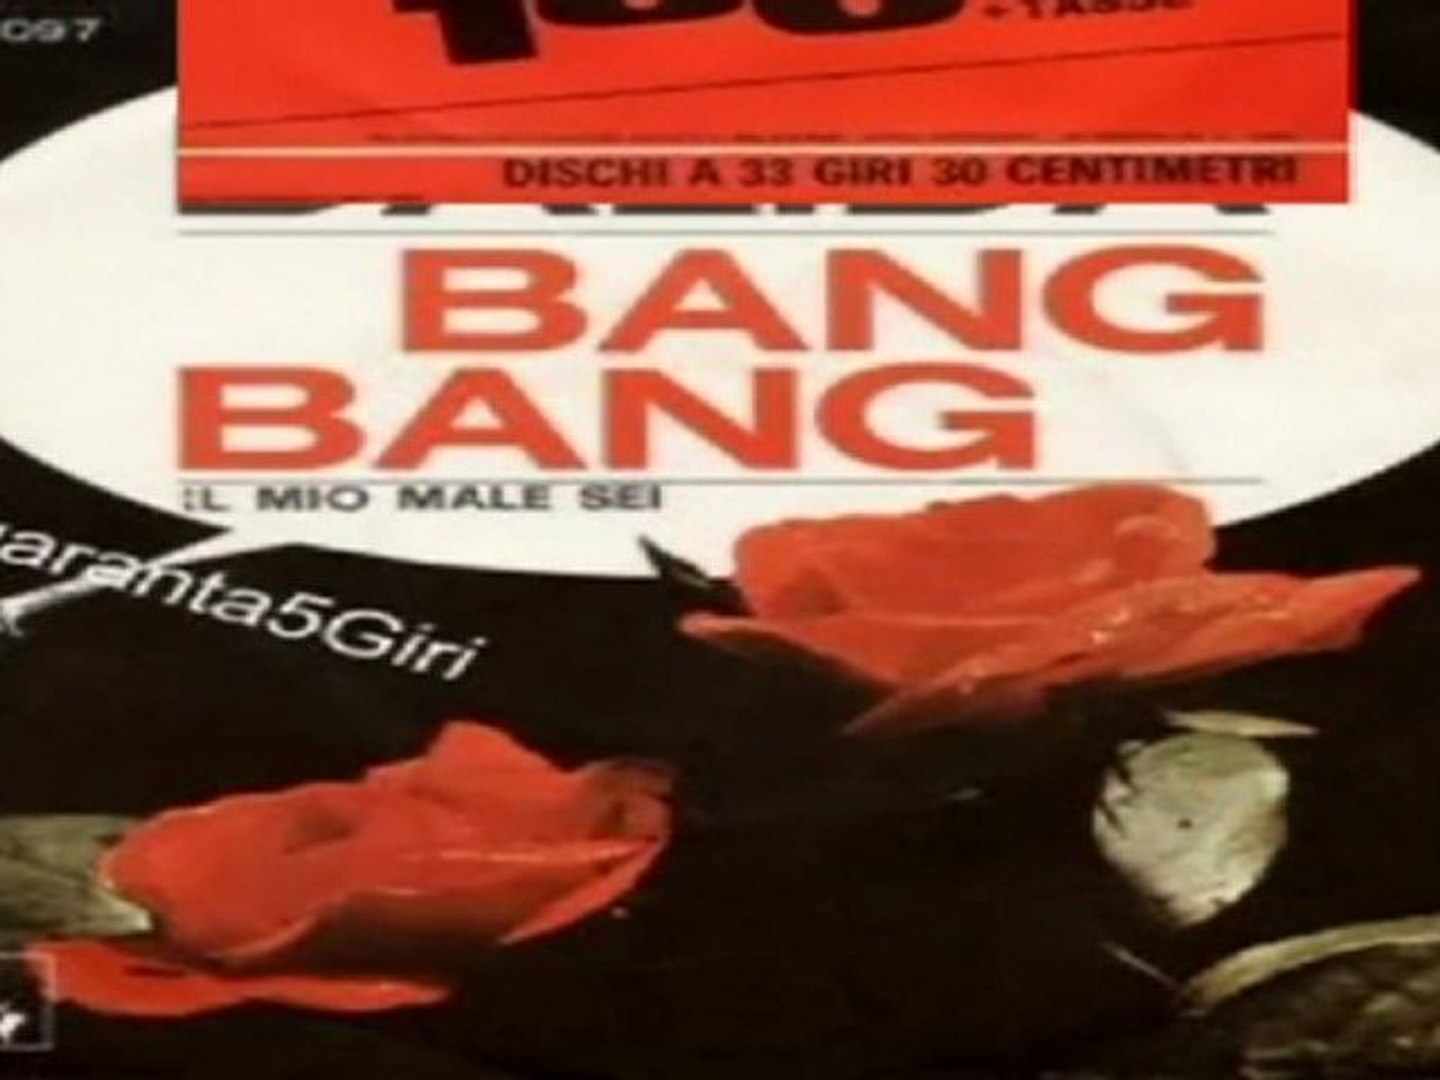 BANG BANG/IL MIO MALE SEI Dalida 1966 (facciate2) - Video Dailymotion